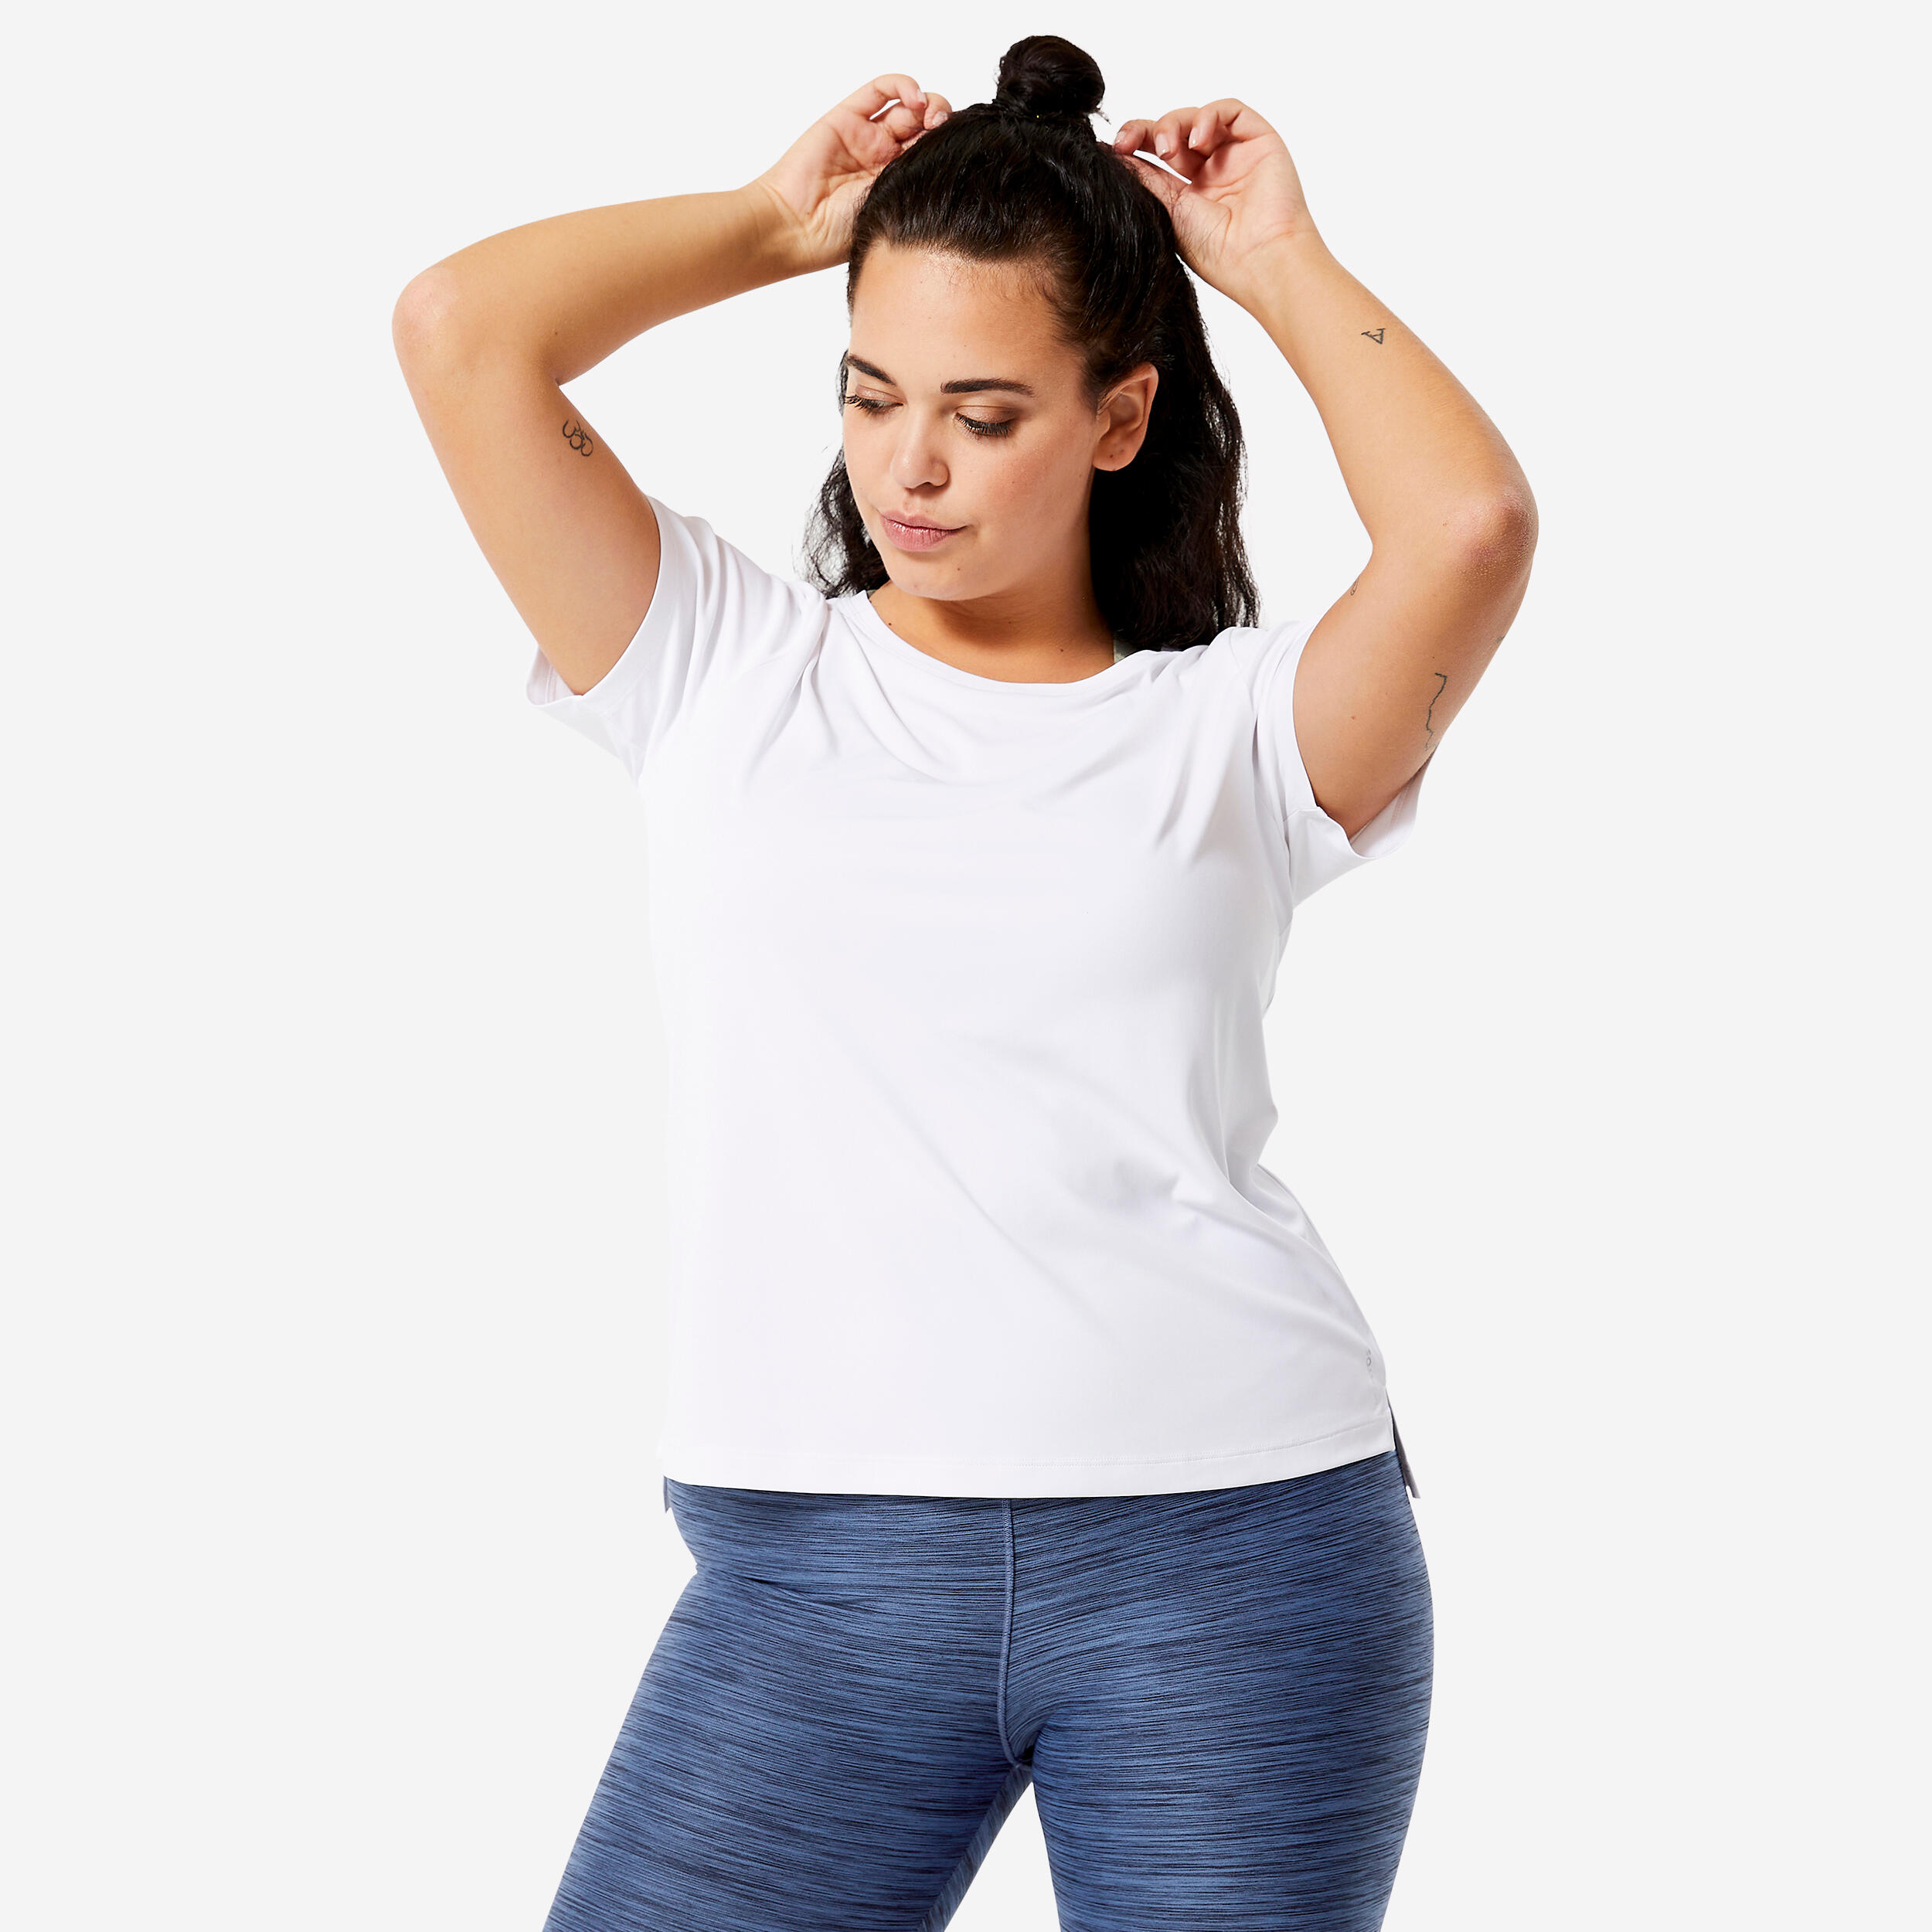 DOMYOS Women's Short-Sleeved Cardio Fitness T-Shirt - White